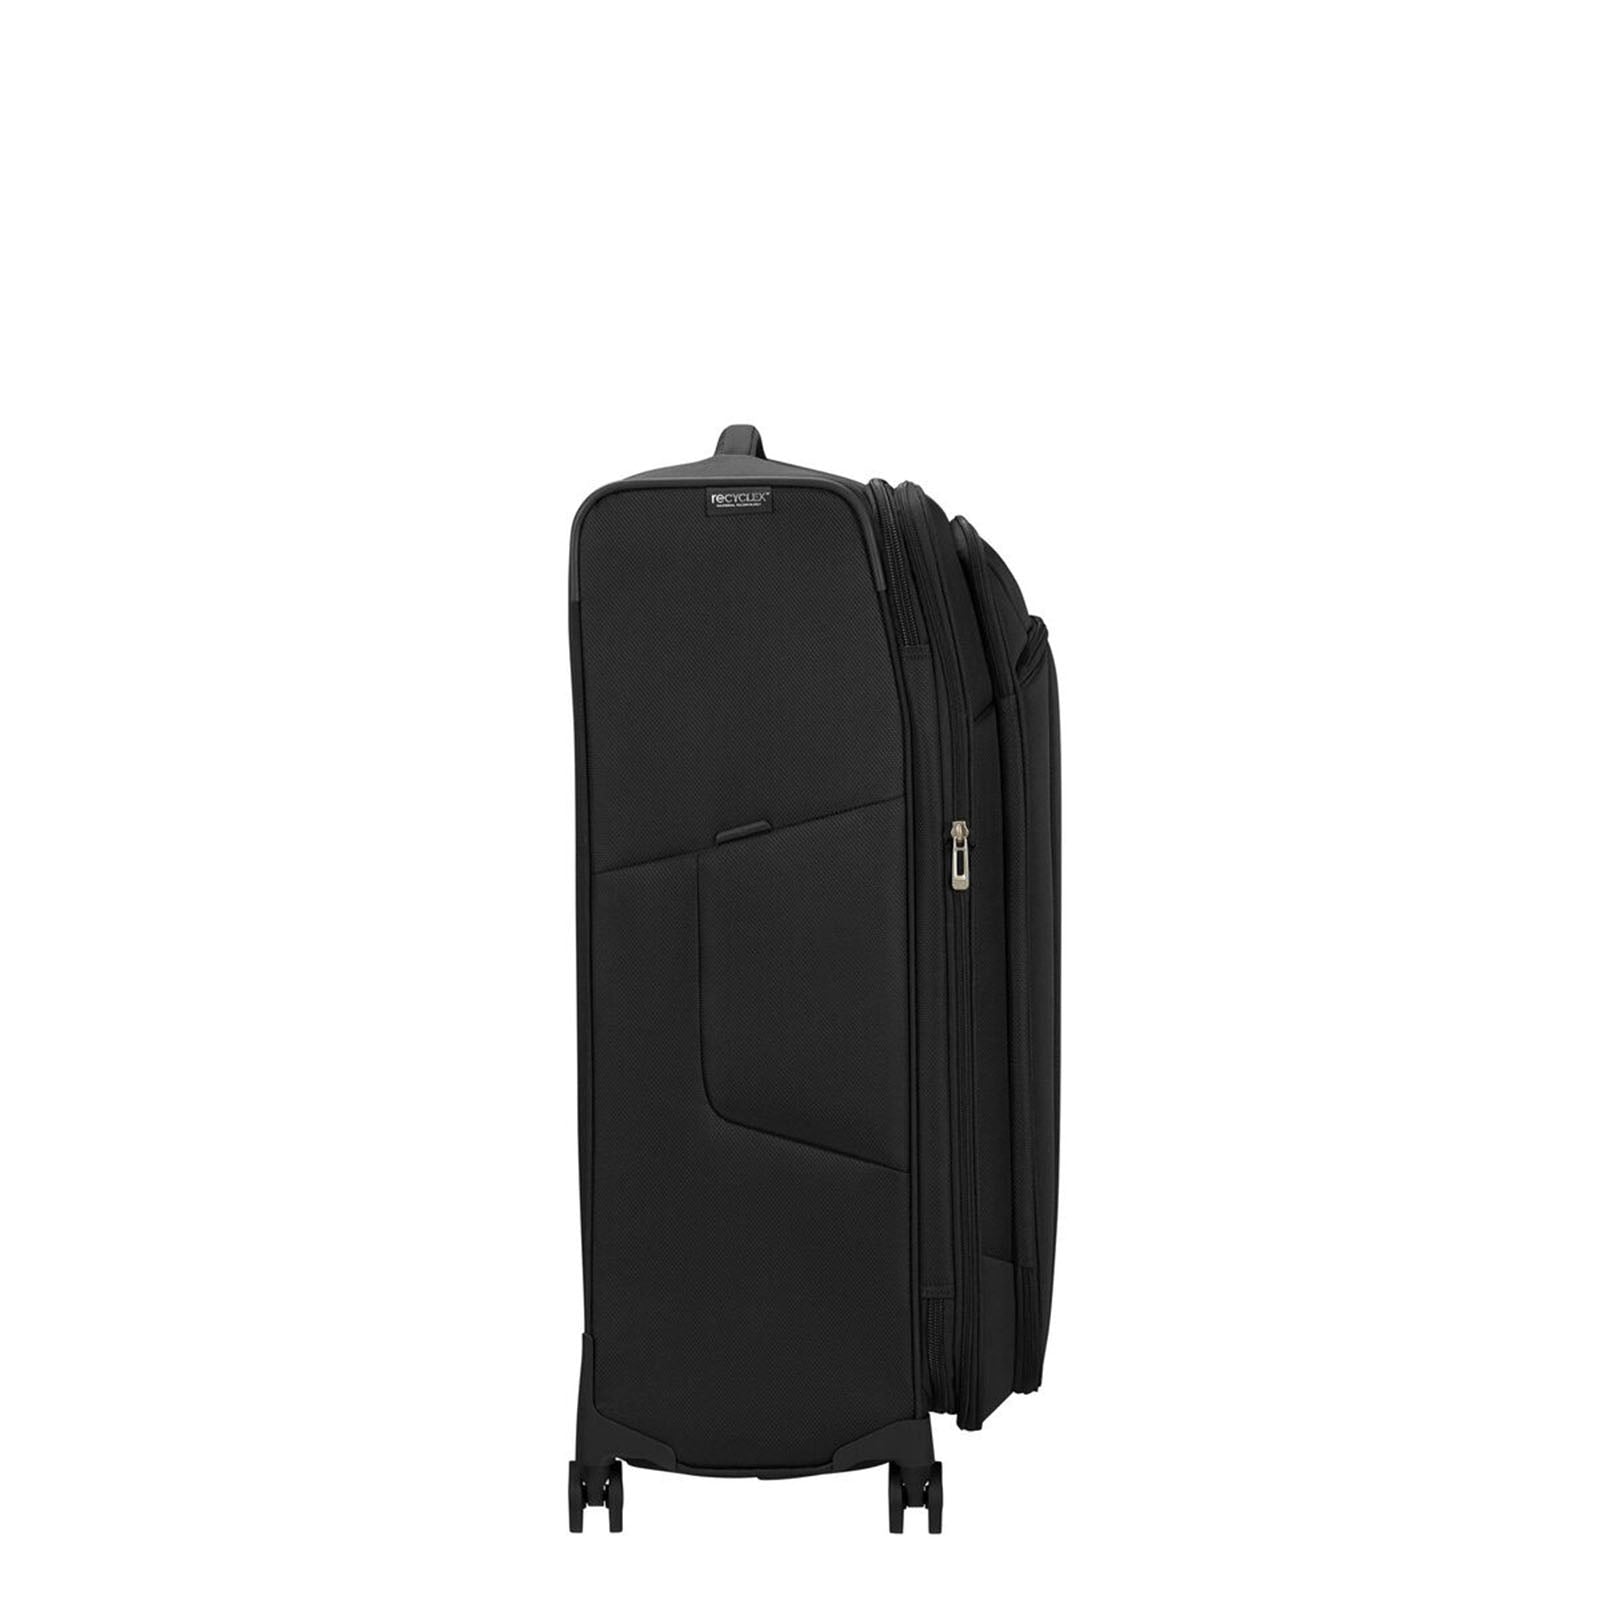 Samsonite-Respark-78cm-Suitcase-Ozone-Black-Side